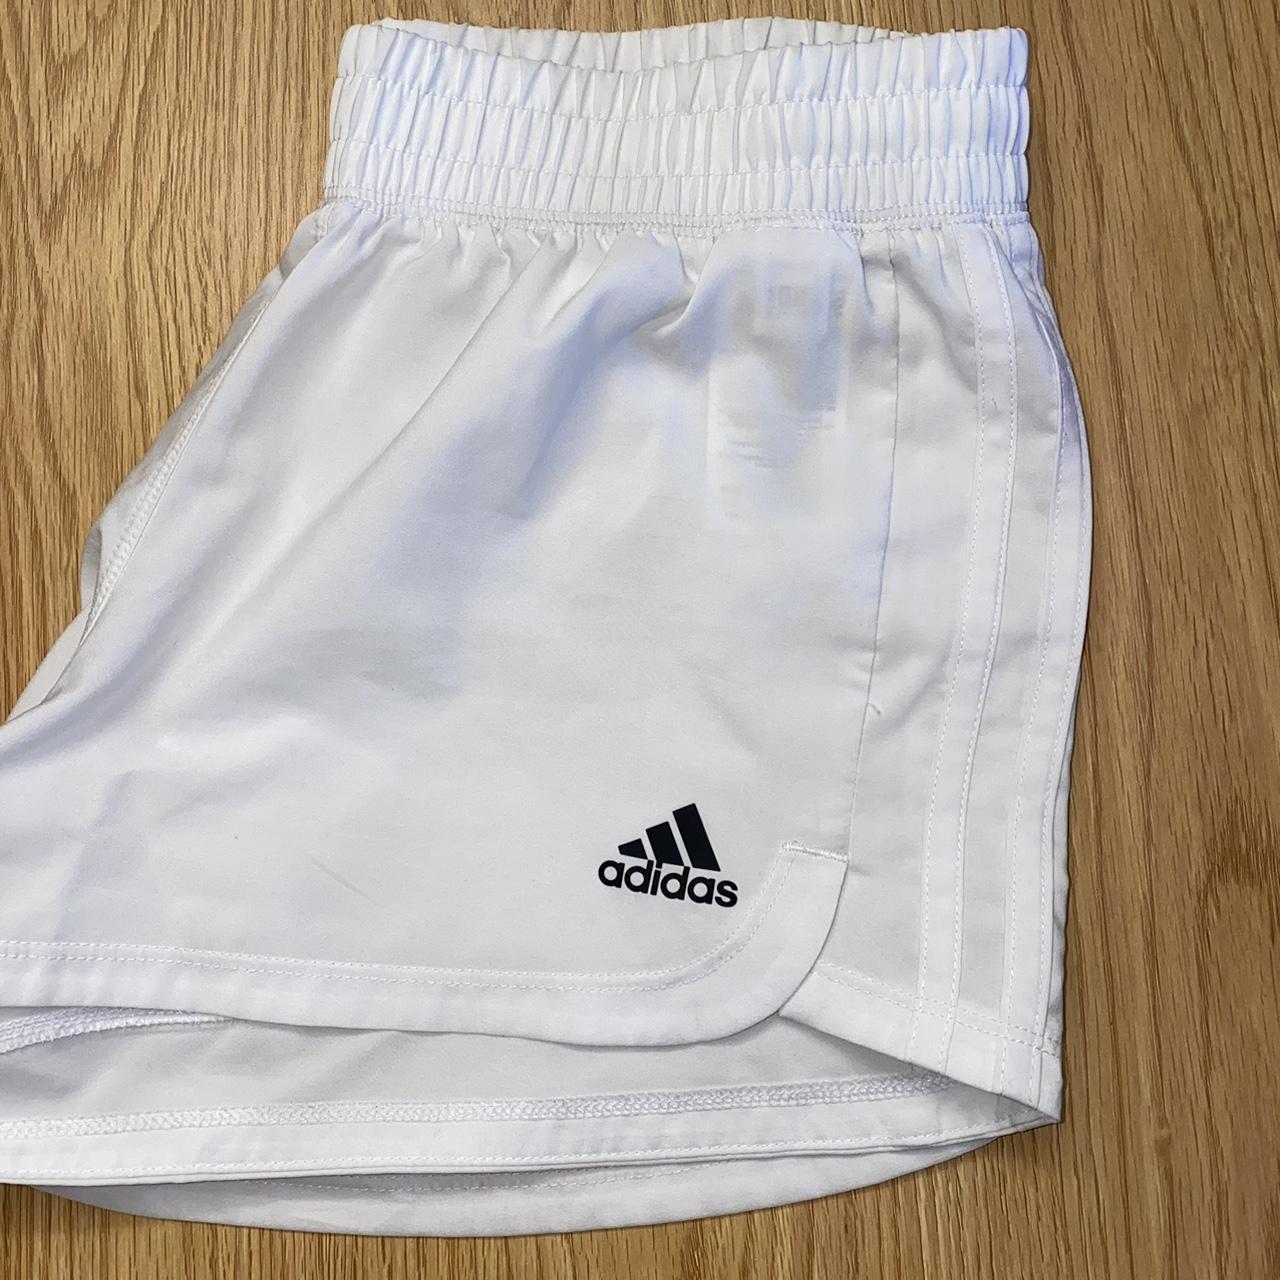 Adidas Women's White Shorts